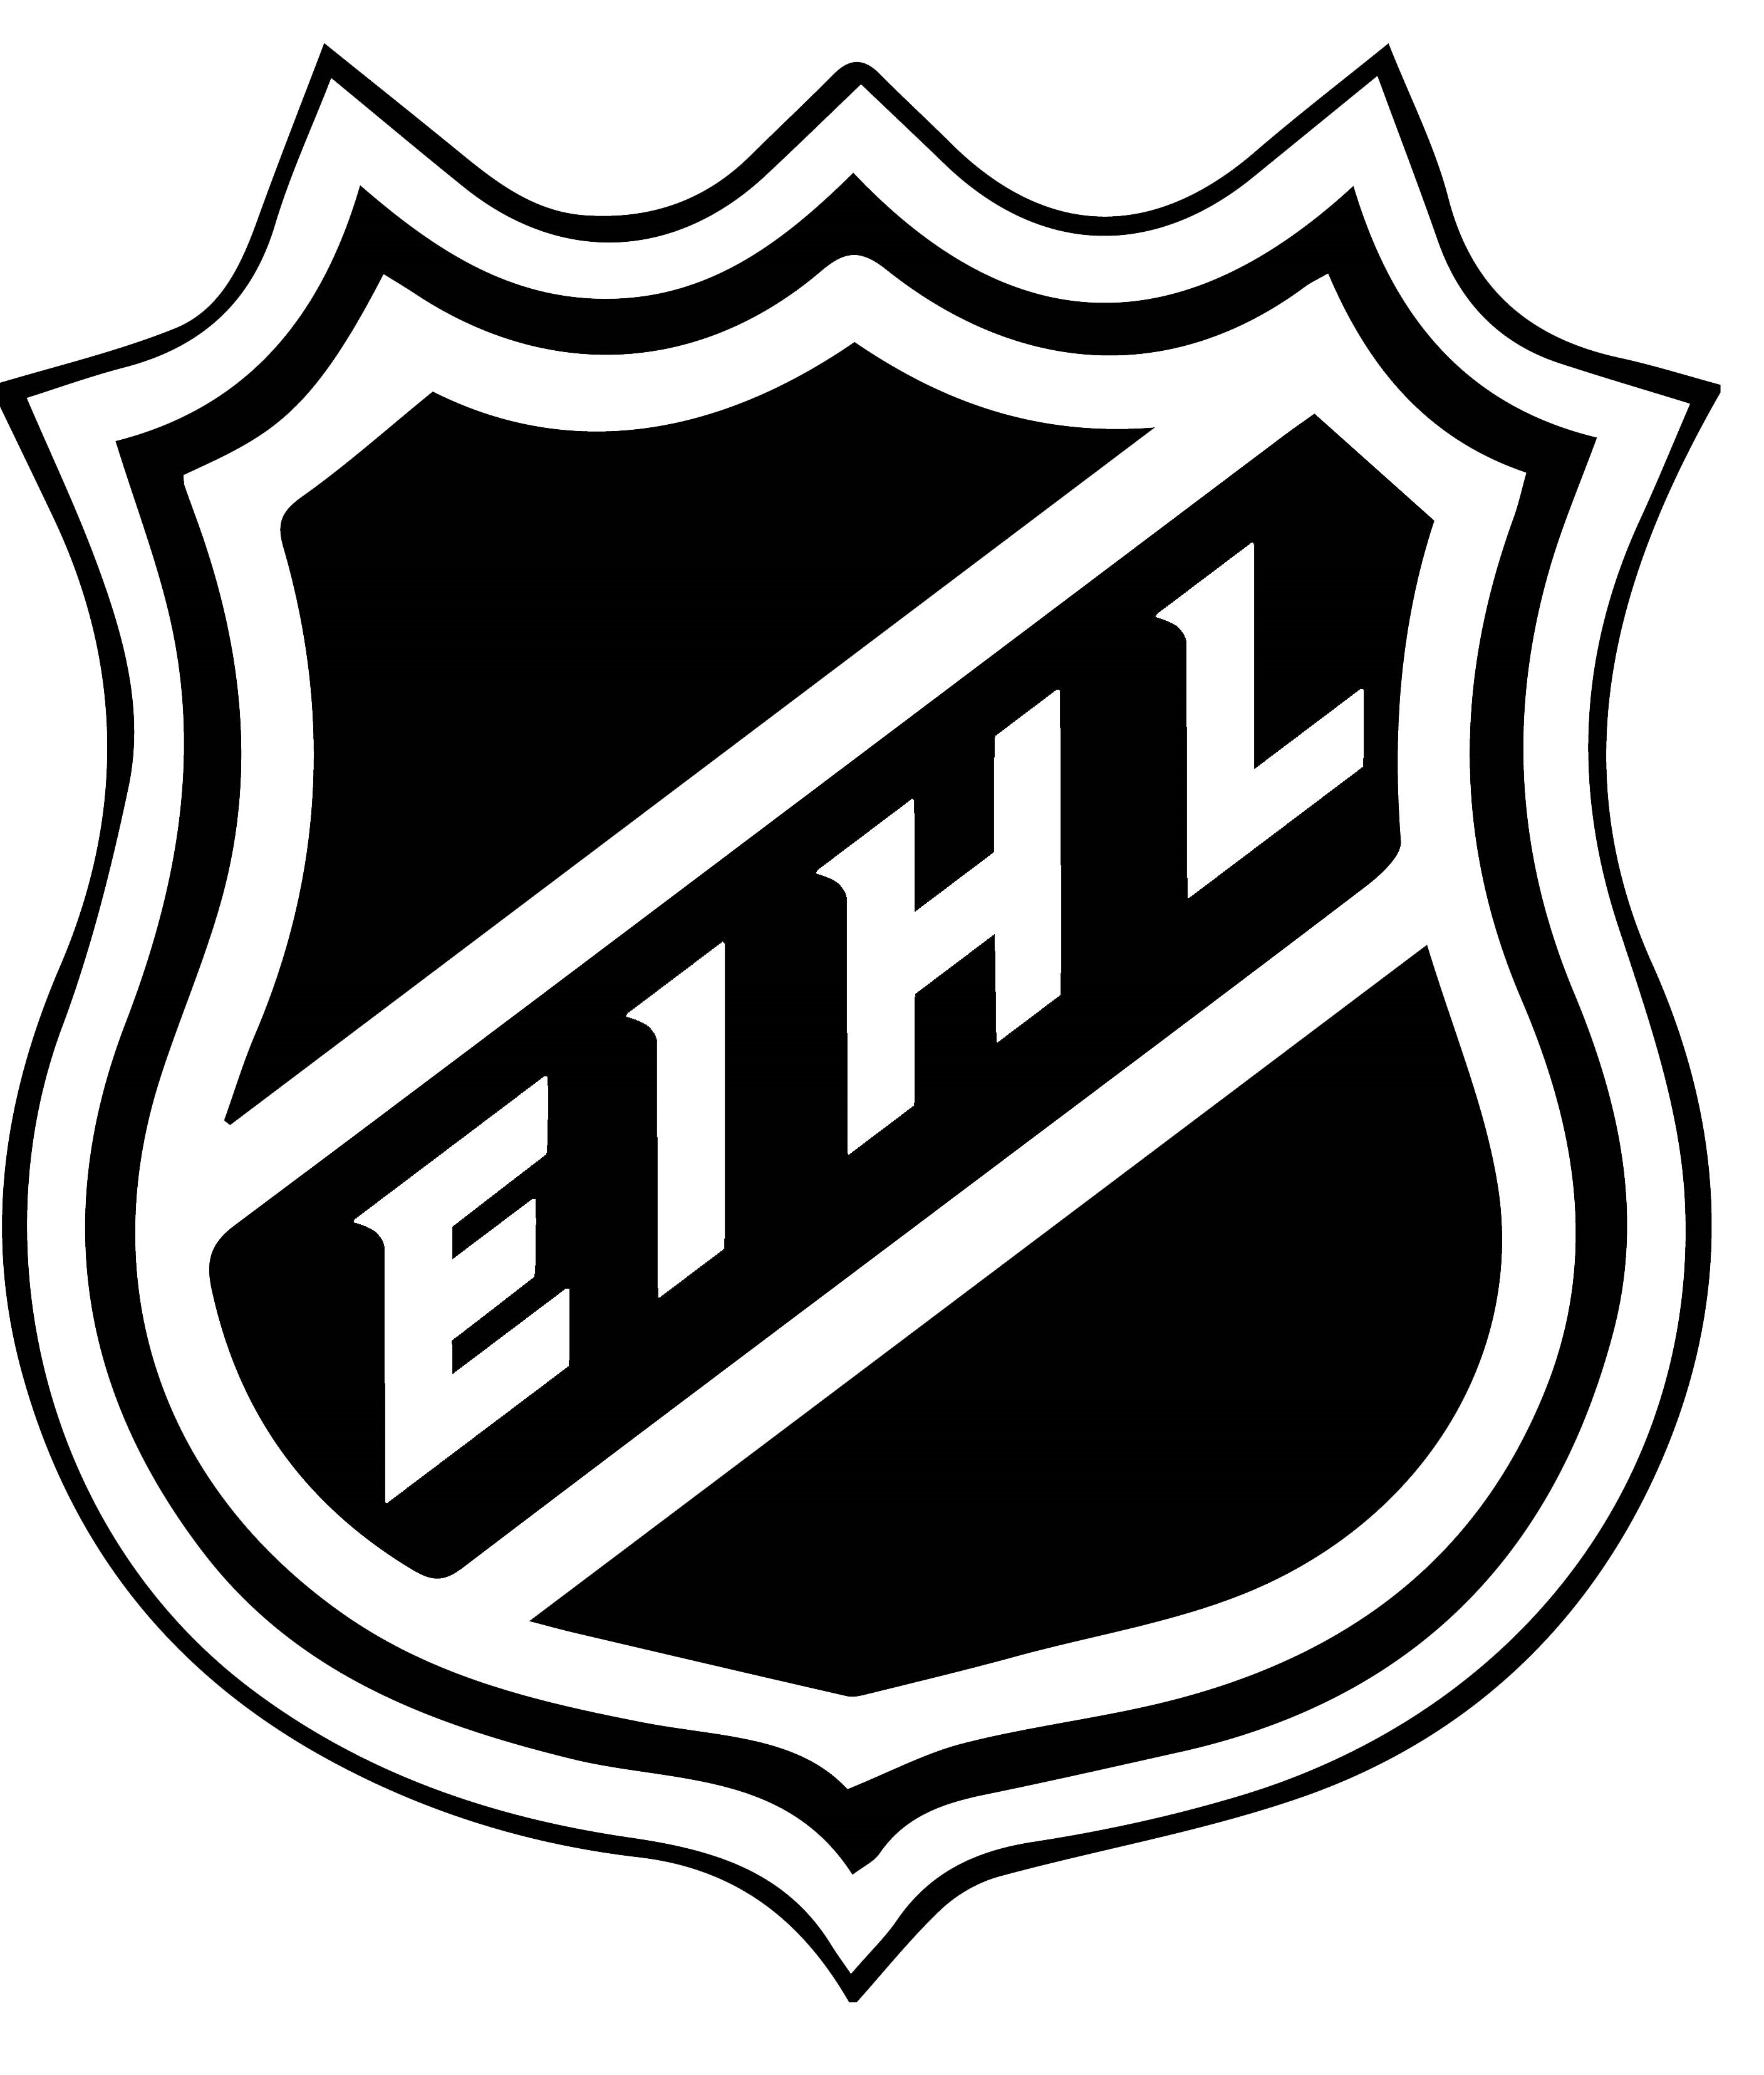 East Indian Hockey League (E.I.H.L.)